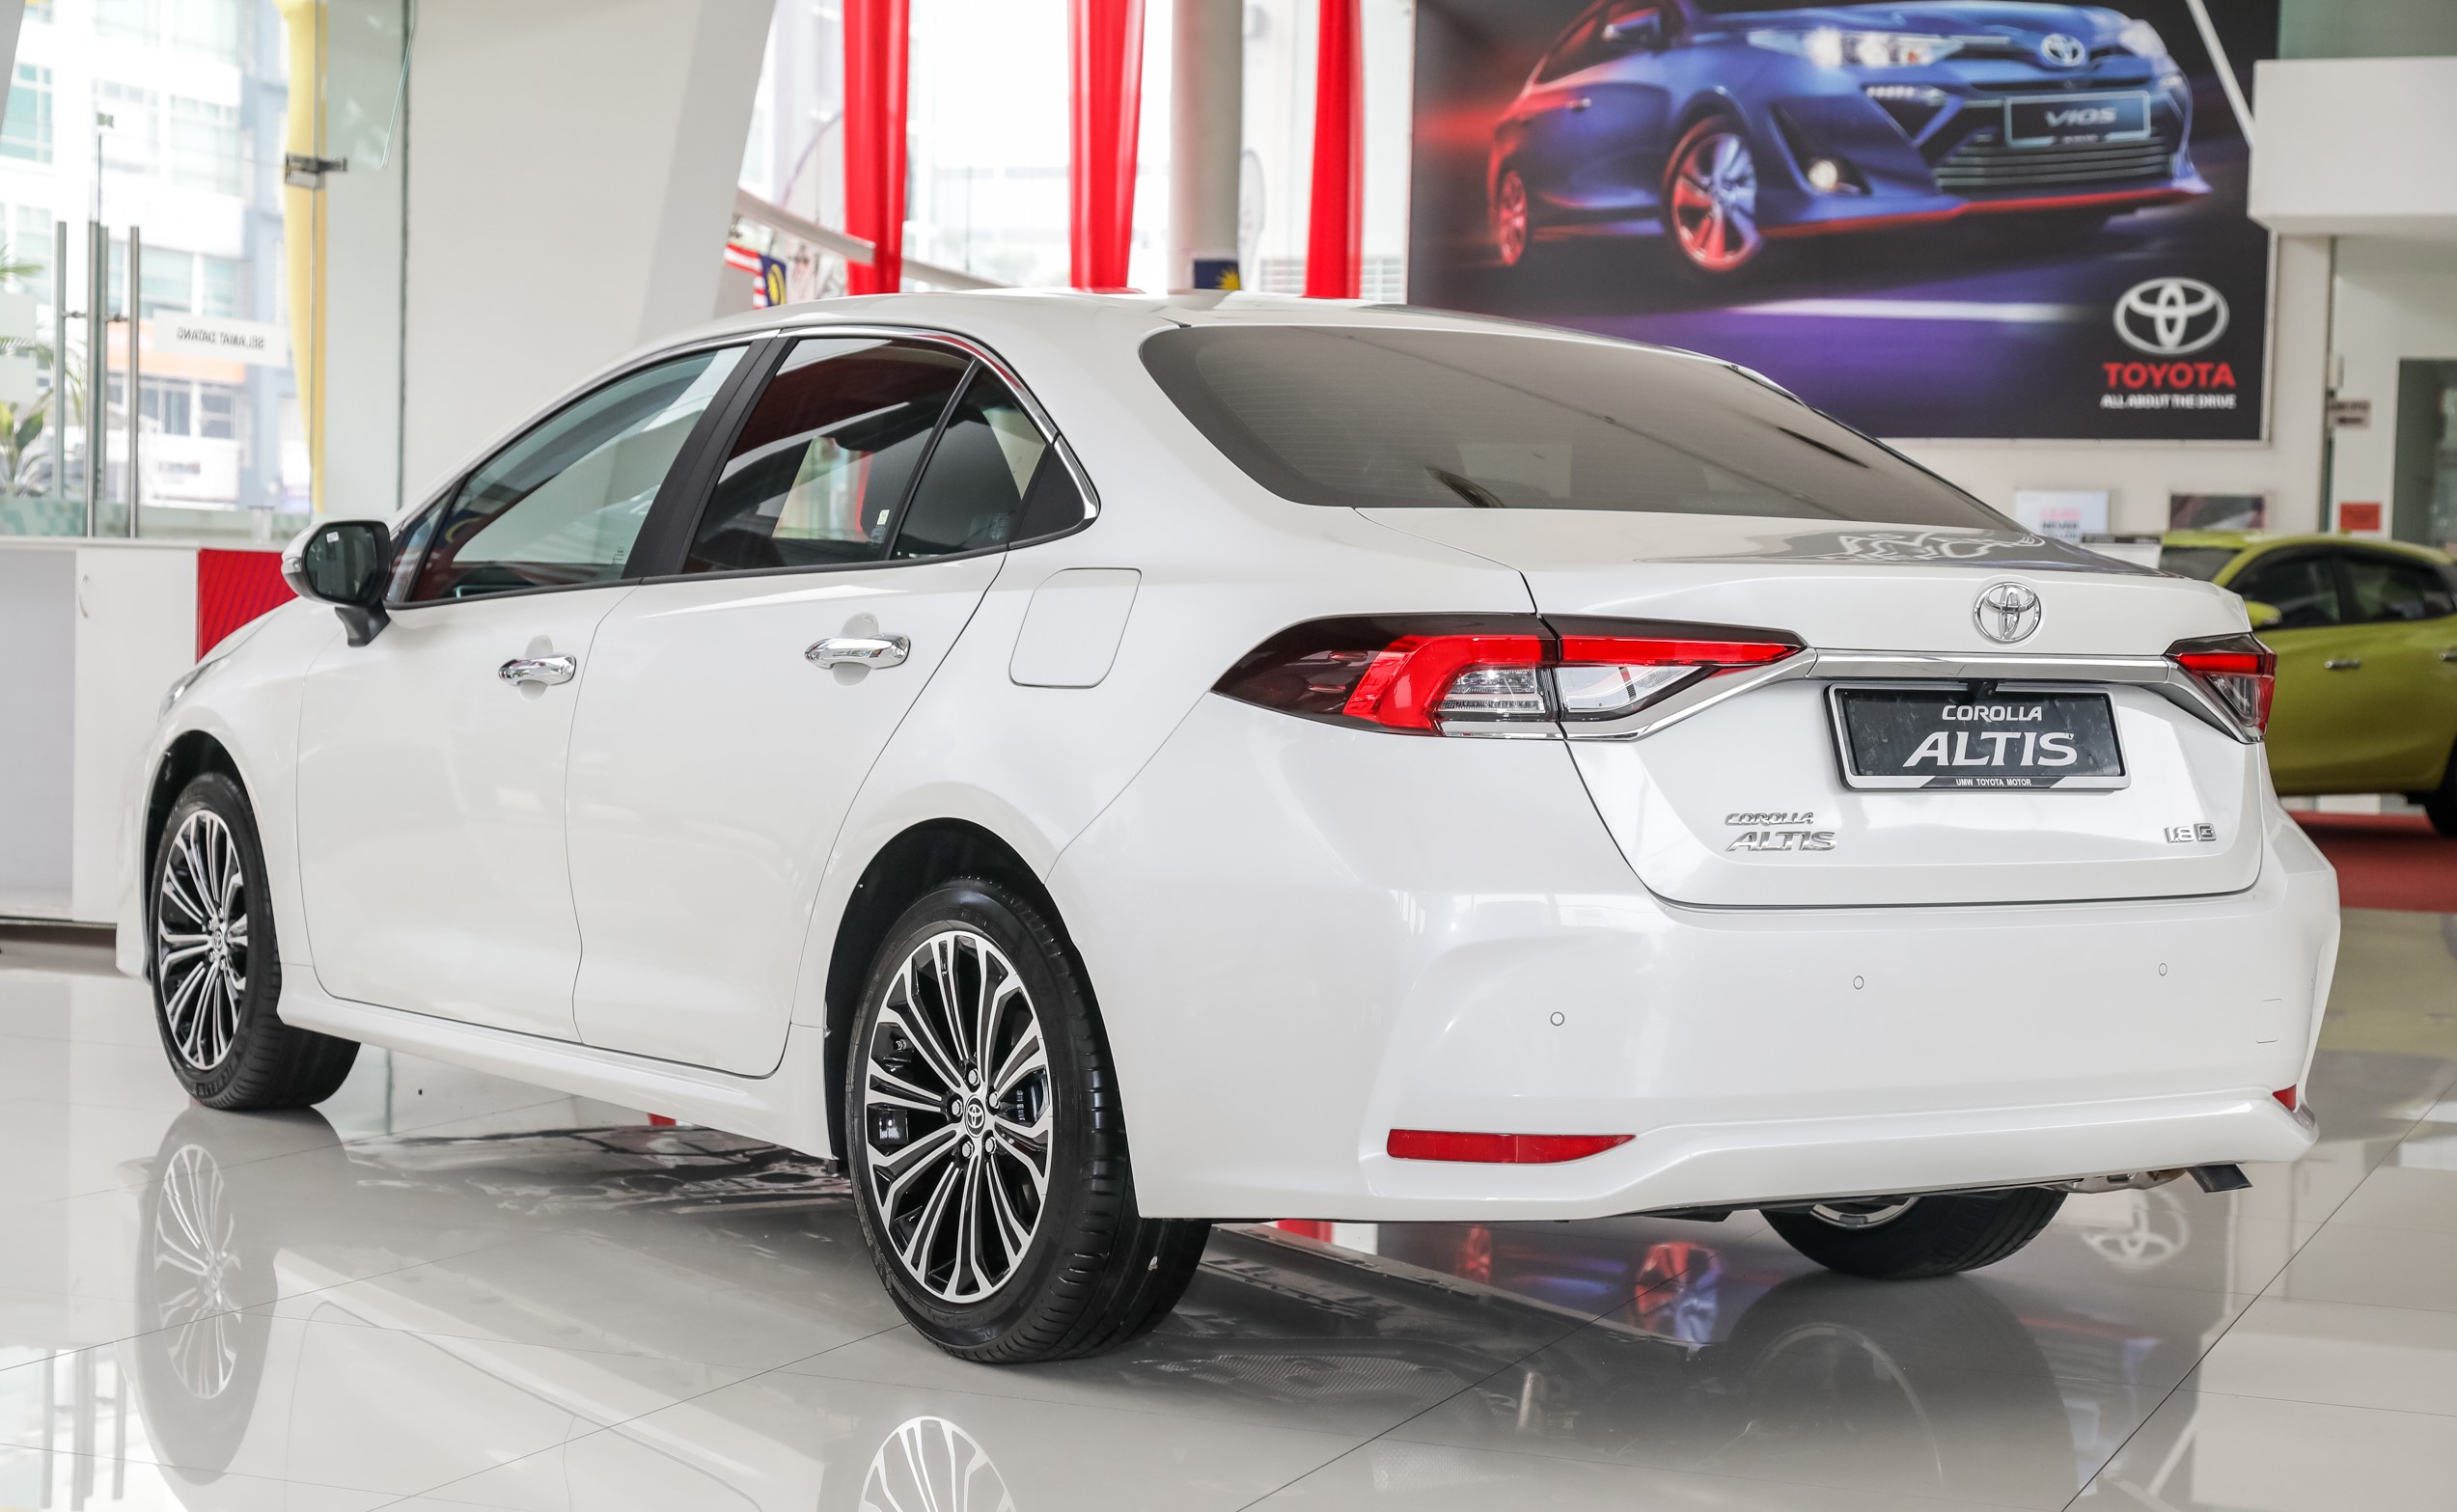 Toyota-Malaysia-Corolla-Altis-1.8G-2019-Showroom_Ext-2 - PakWheels Blog